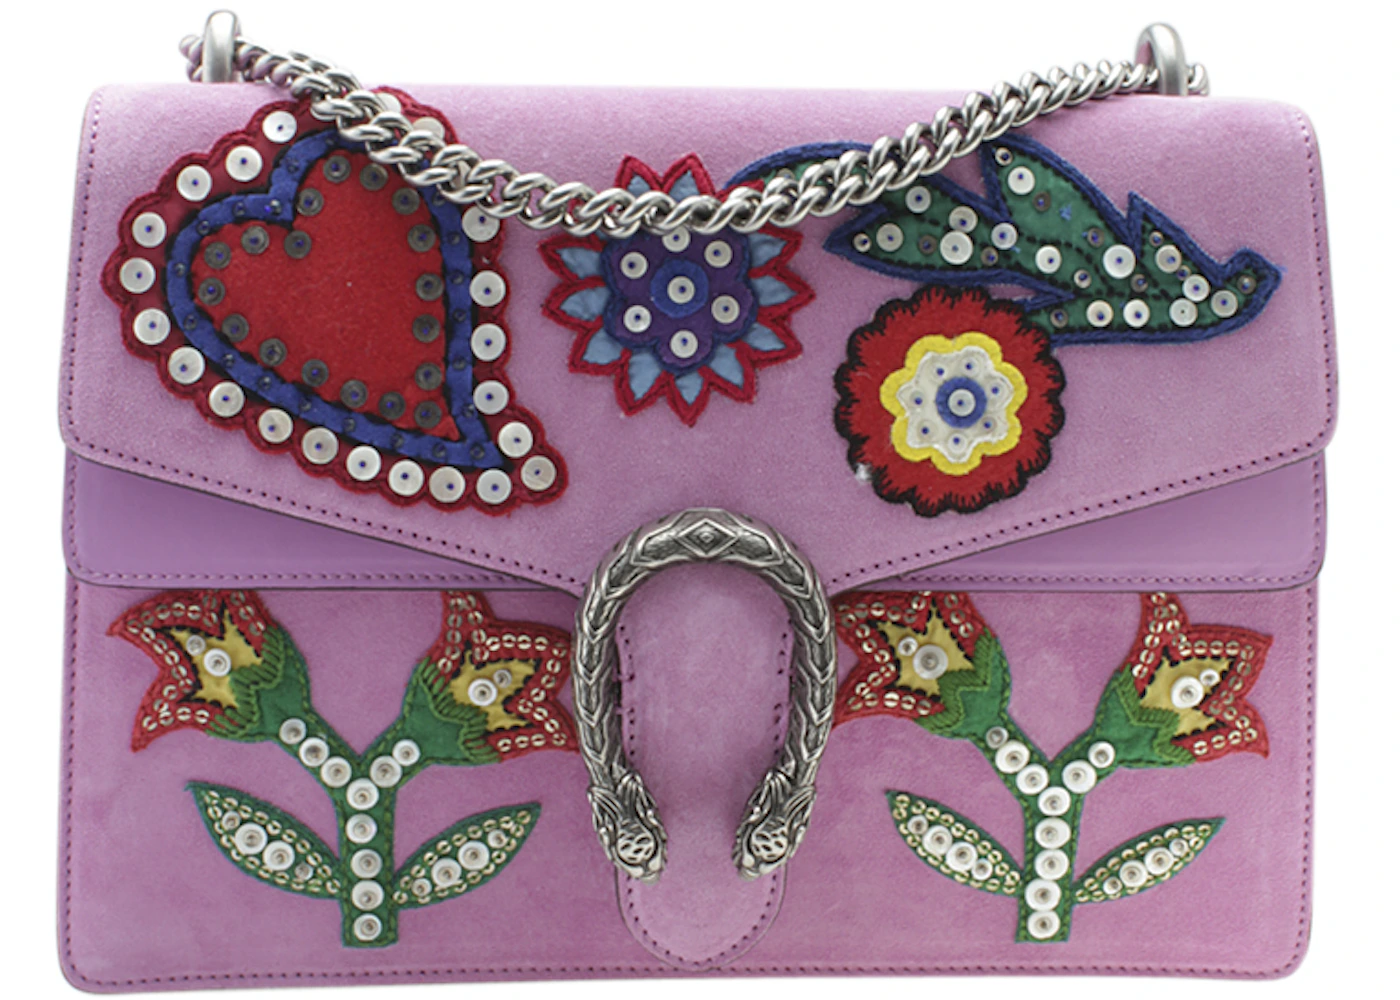 Gucci Dionysus Shoulder Bag Medium Floral Embroidered Suede Pink in ...